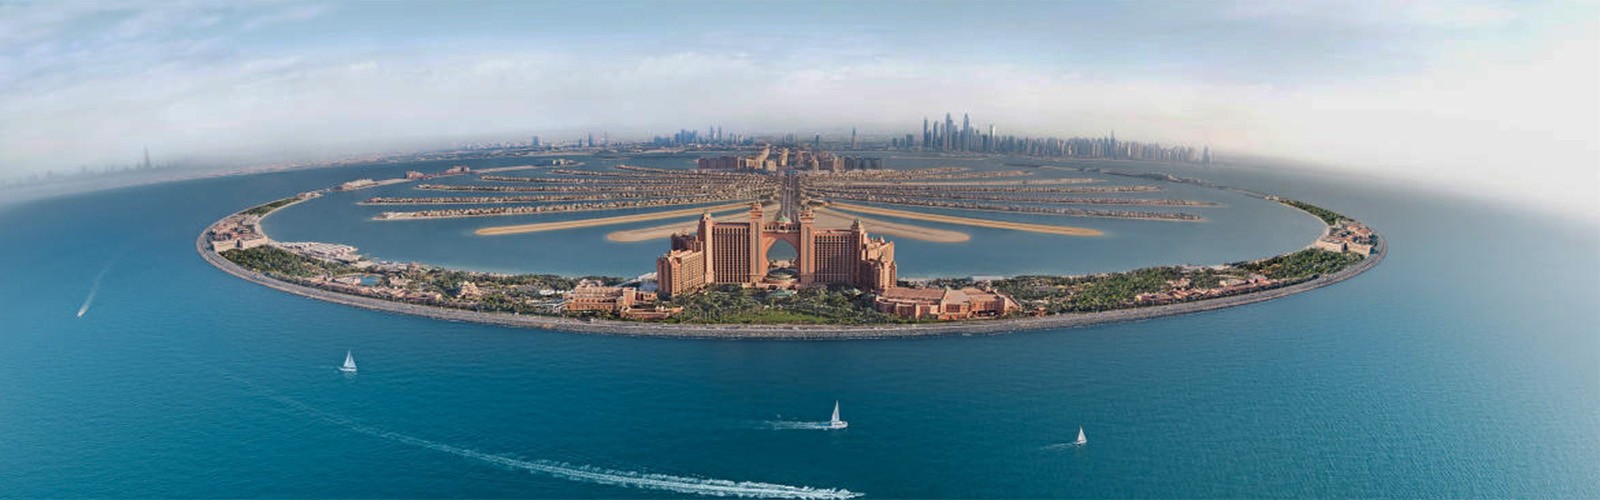 Top 10 Reasons To Go To Atlantis The Palm Dubai Header